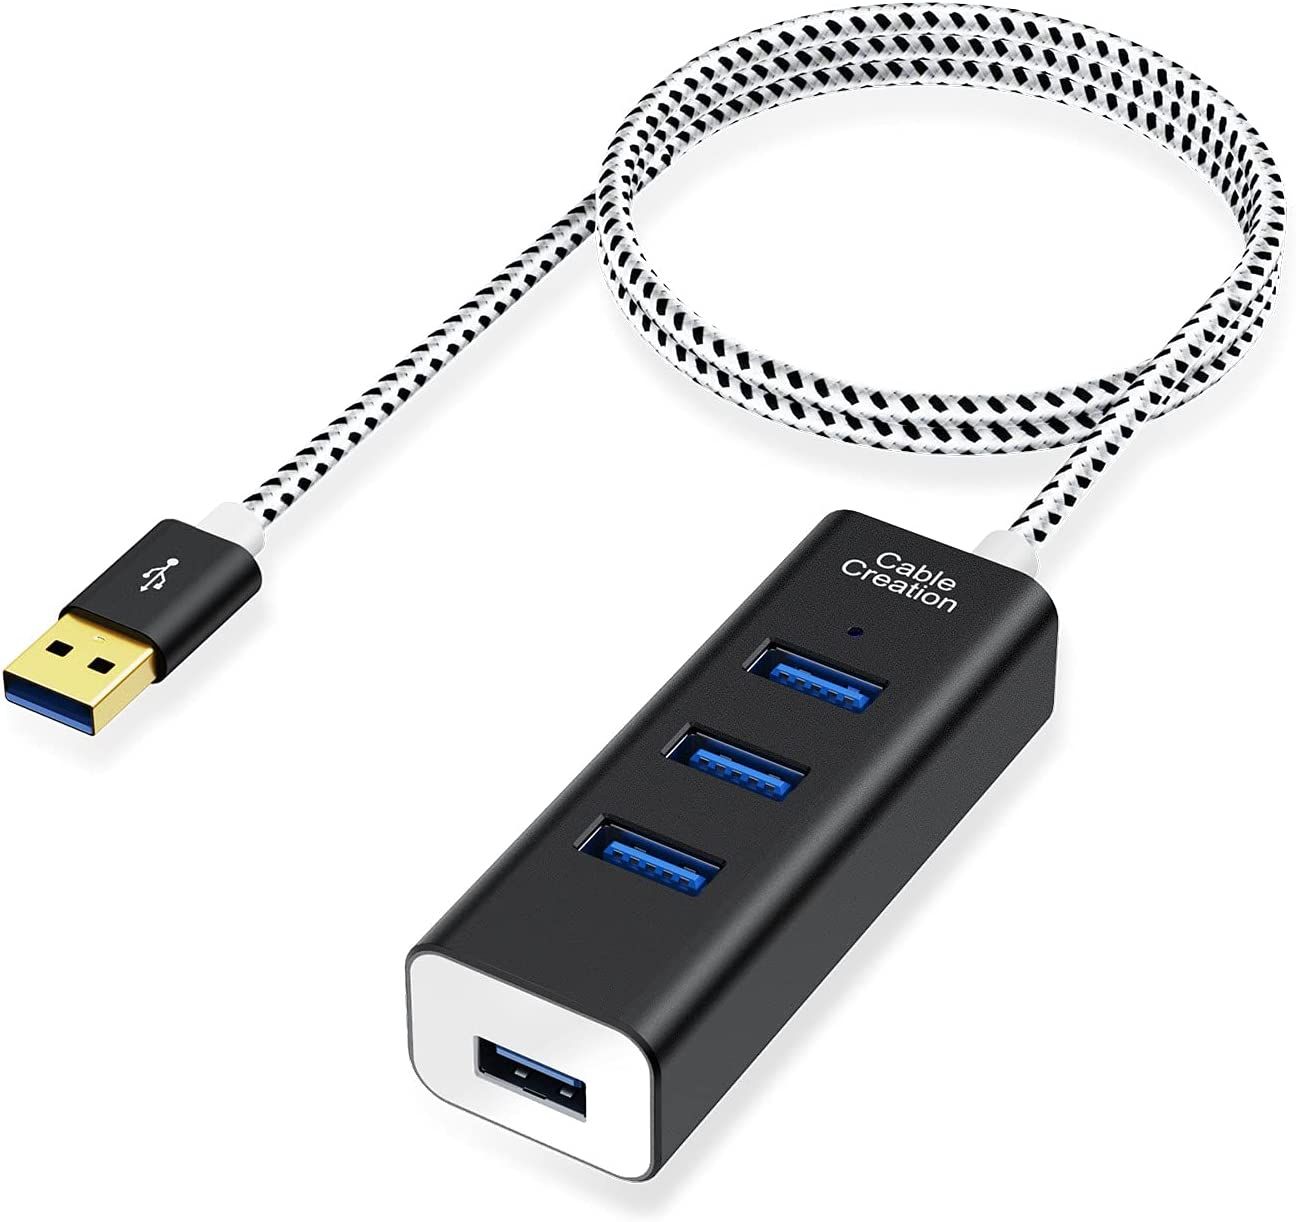 CableCreation 4-Port USB 3.0 Hub featuring four usb ports